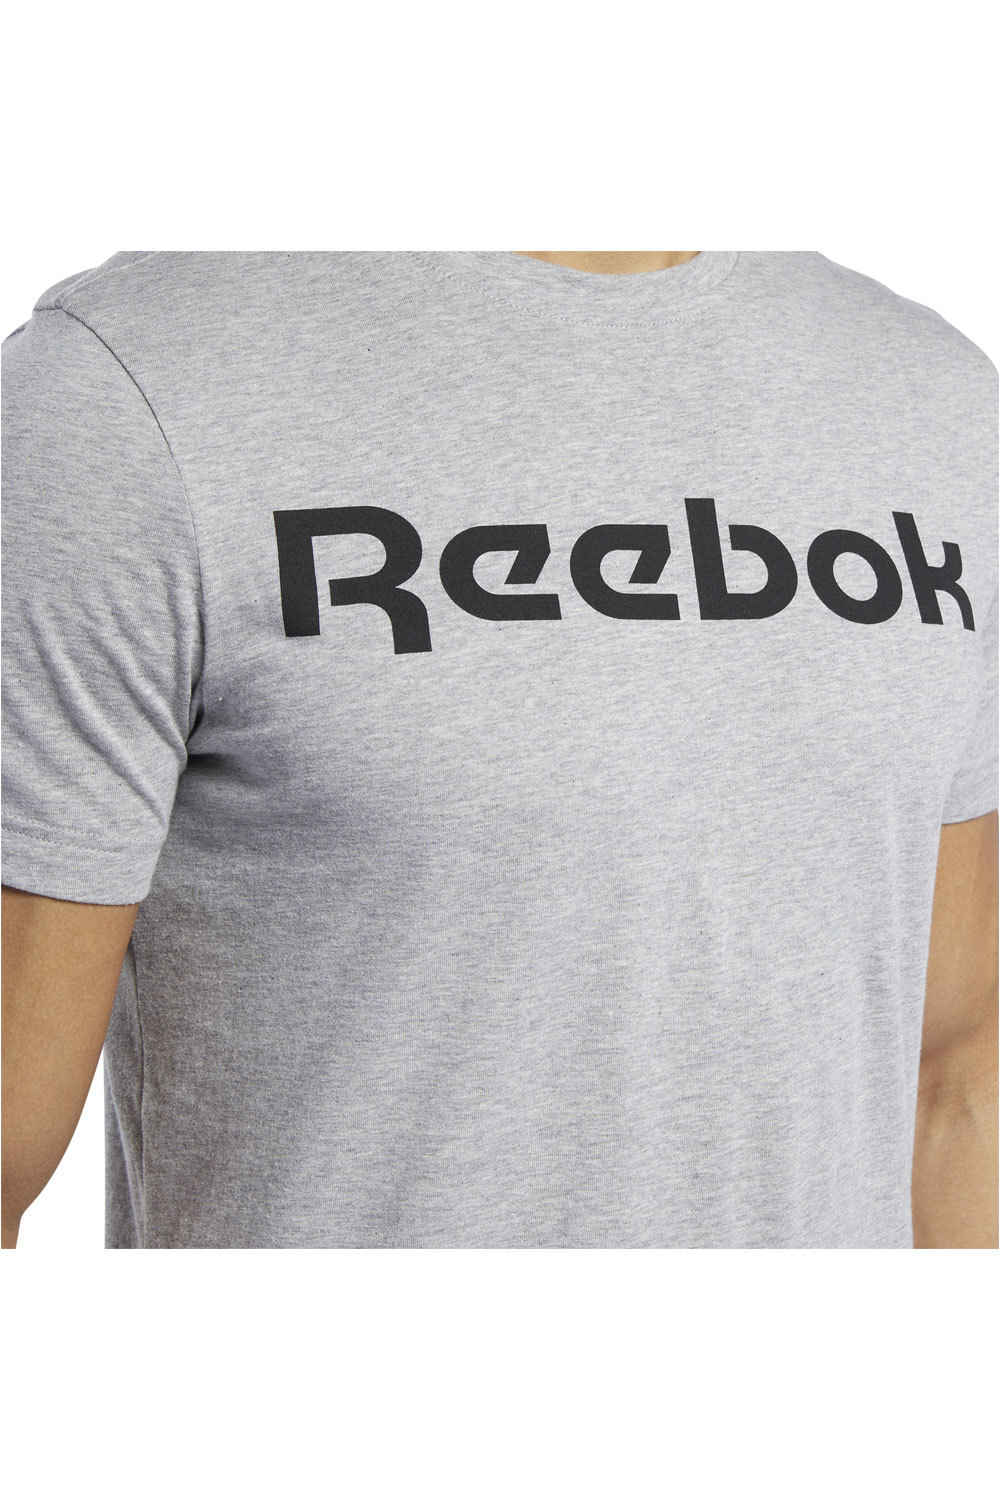 Reebok camiseta fitness hombre GS Reebok Linear Read Tee GR GS vista detalle